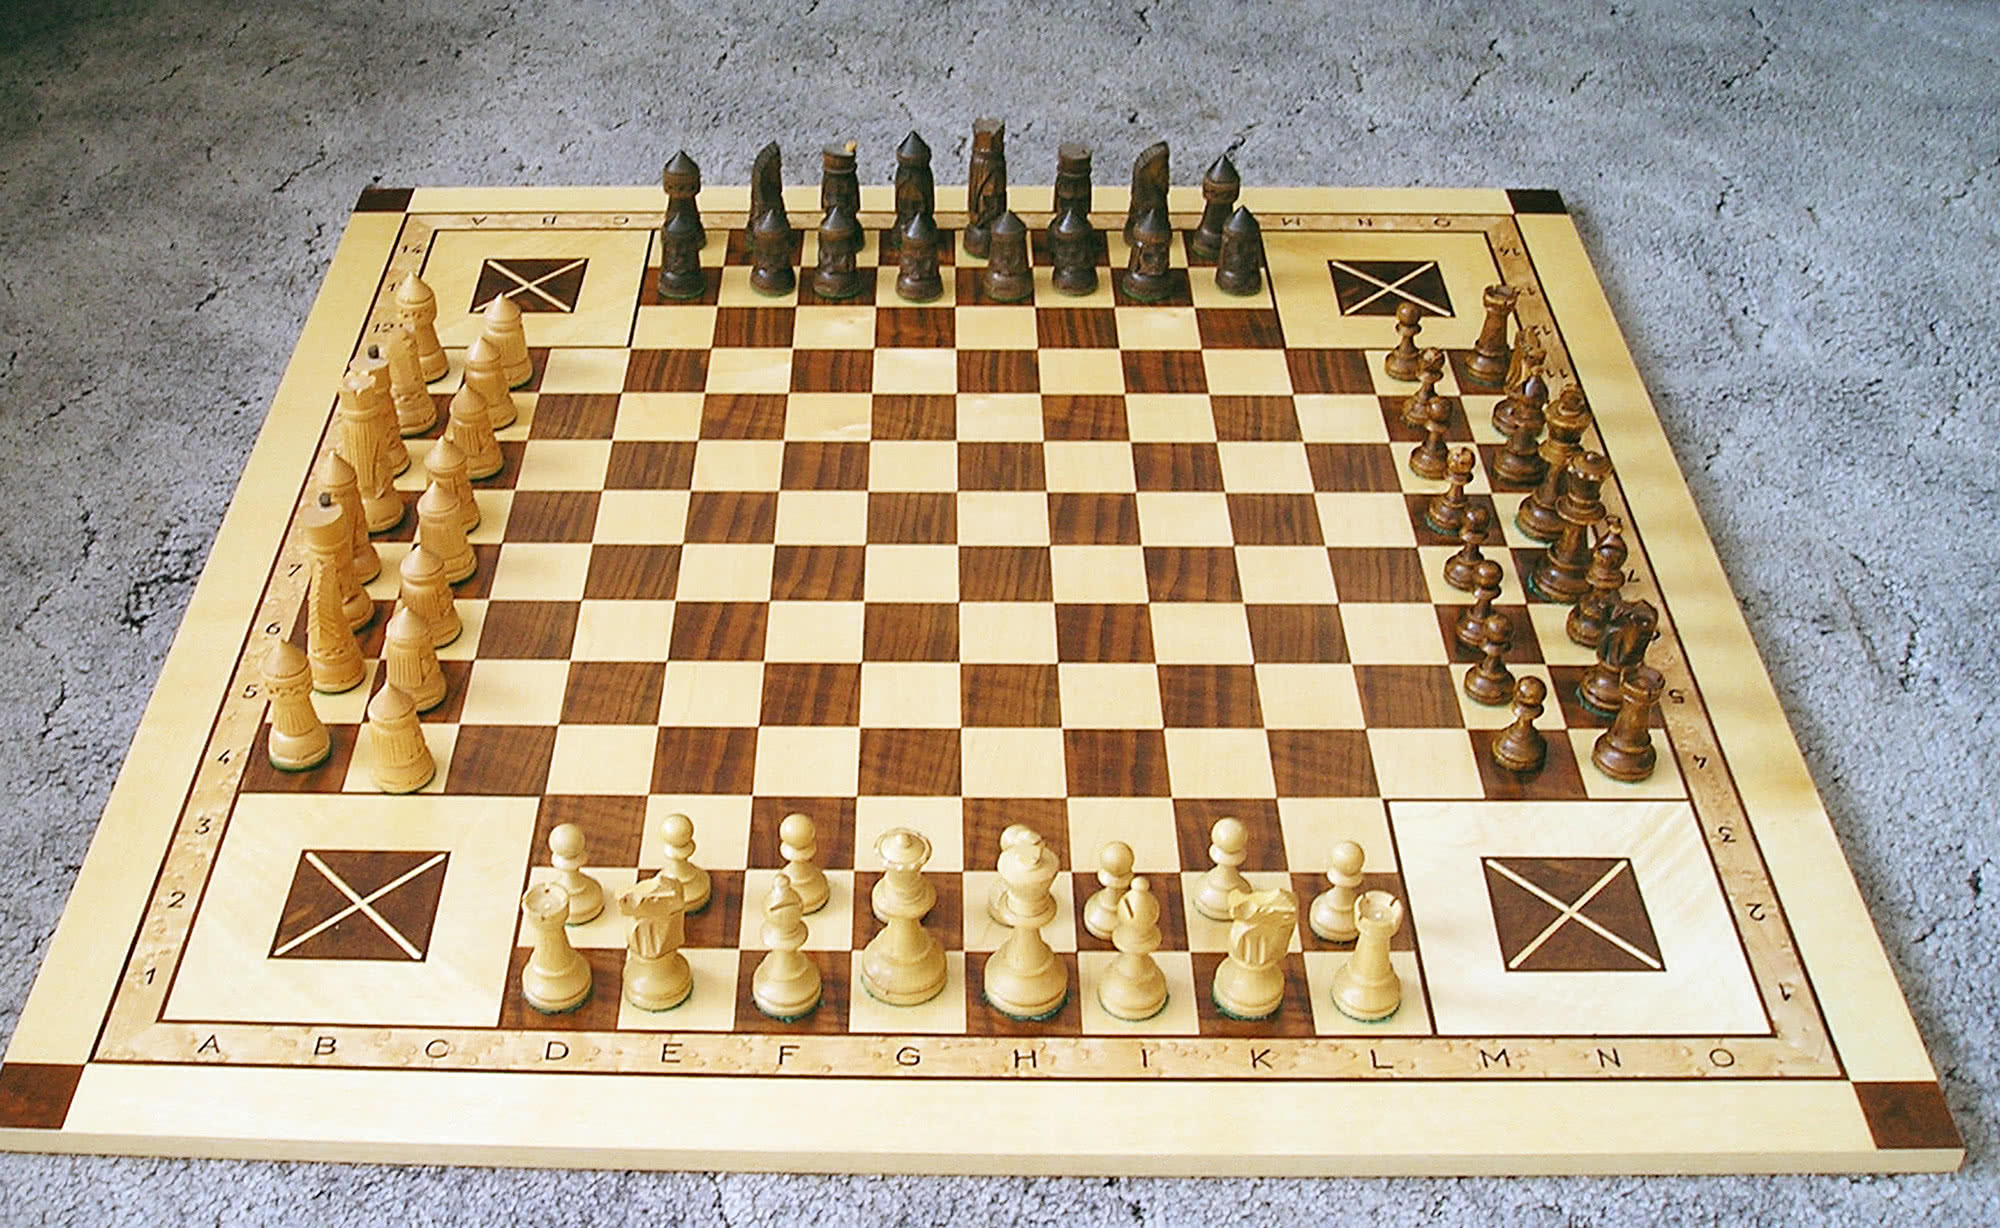 Игры на доске 8 на 8. Четырехсторонние шахматы. Шахматы 4 на 4. Шахматы на 4 игрока. Русские четверные шахматы с крепостями.